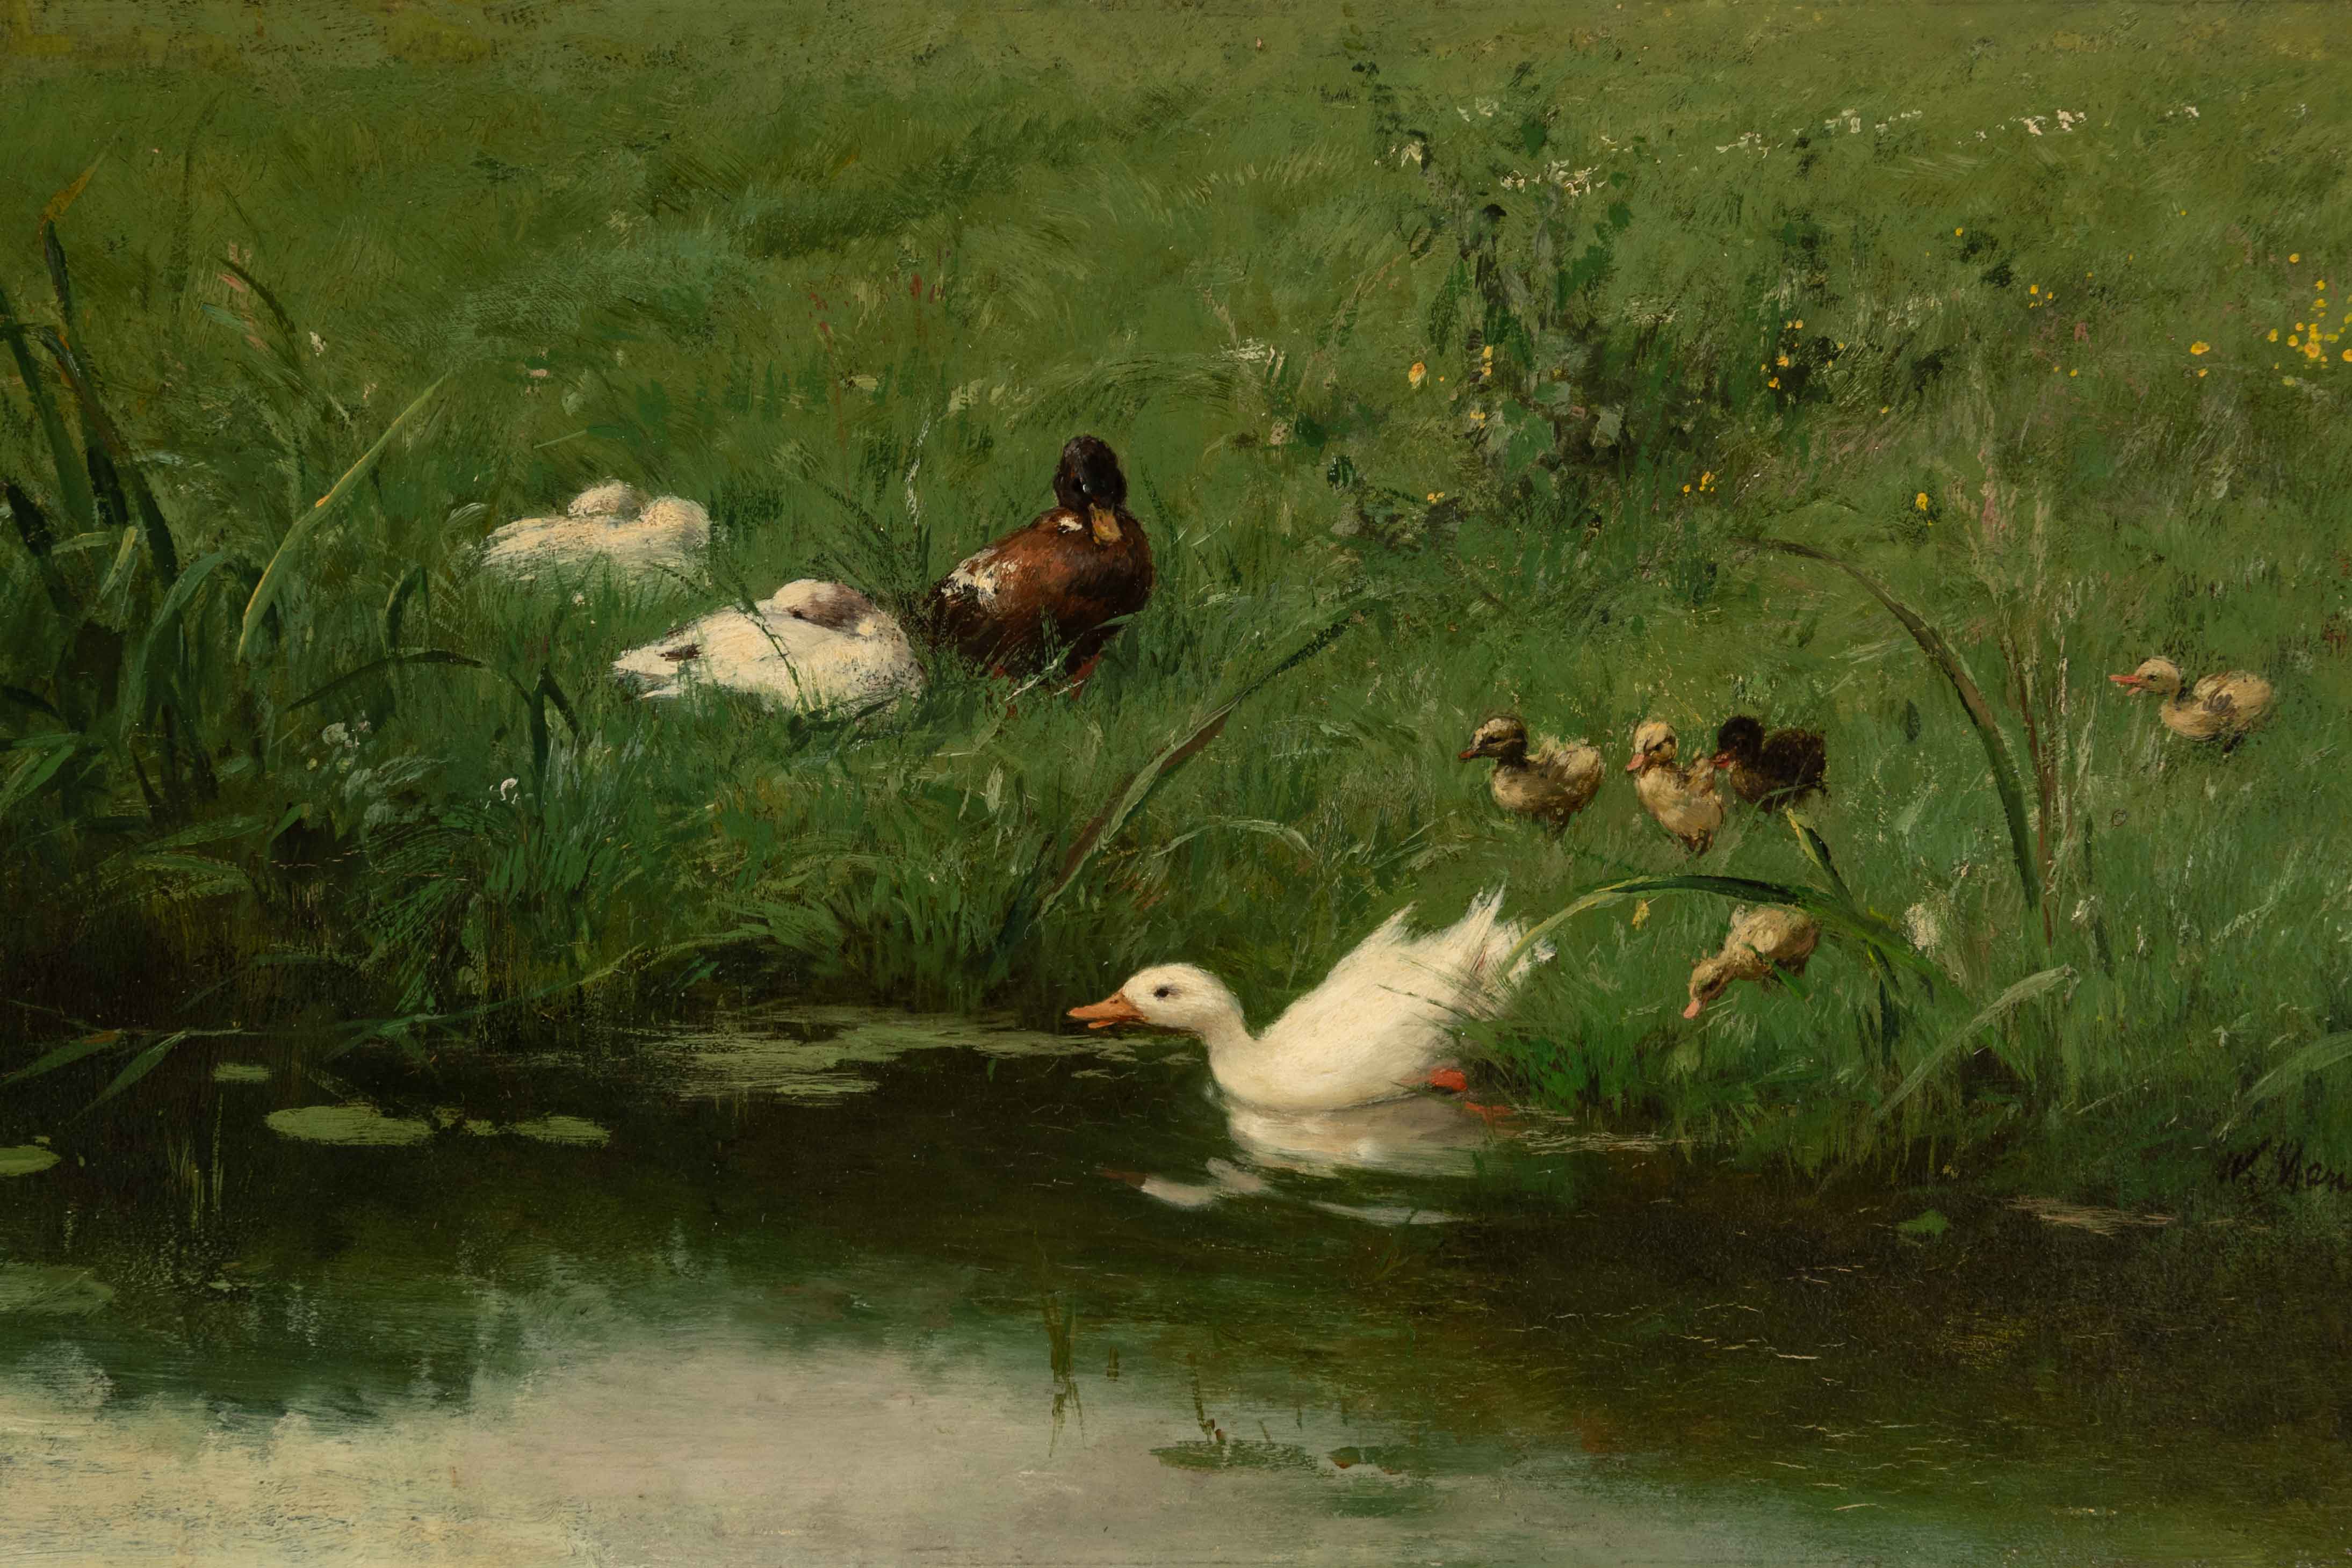 Willem Maris (Dutch, 1844–1910), Ducks, about 1875–80, oil on panel, 8 5/8 x 16 5/8 in. (21.91 x 42.23 cm). Taft Museum of Art, Cincinnati, Ohio. Bequest of Charles Phelps Taft and Anna Sinton Taft, 1931.408